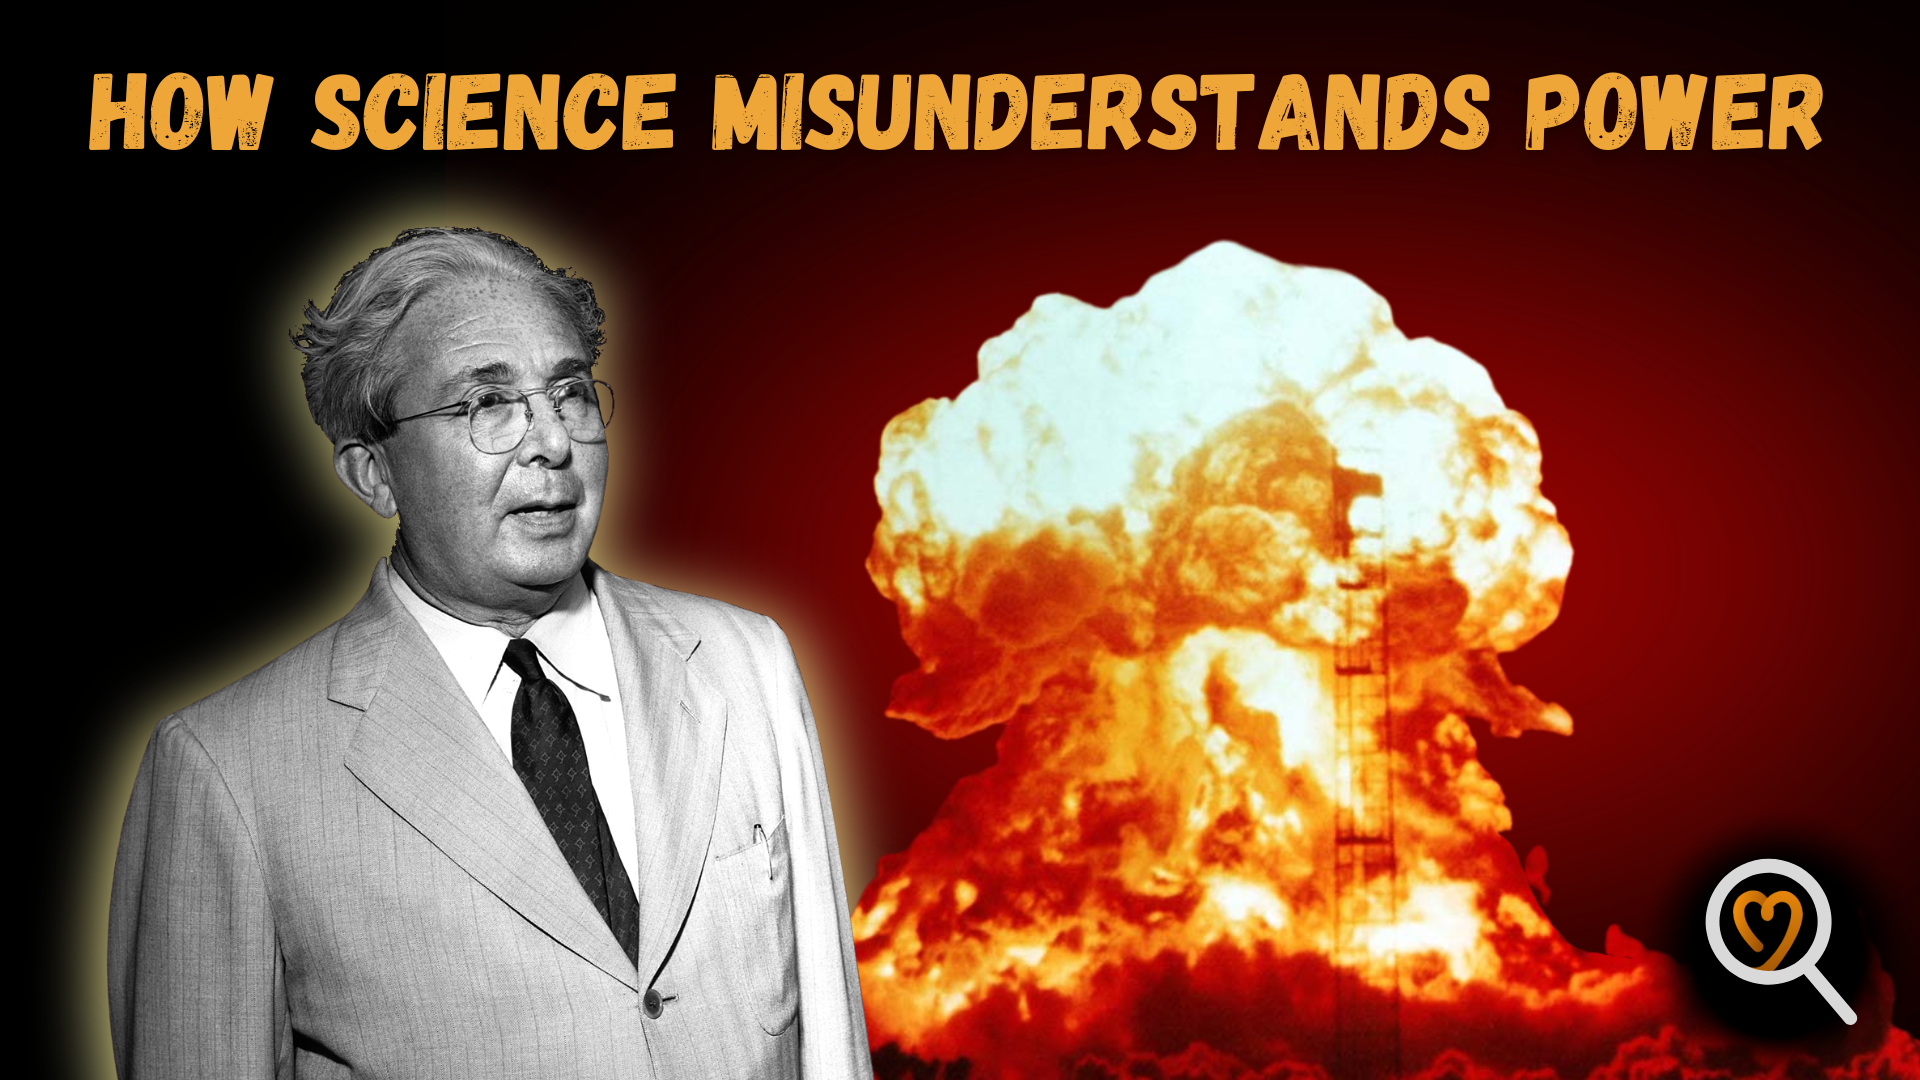 Video: How Science Misunderstands Power